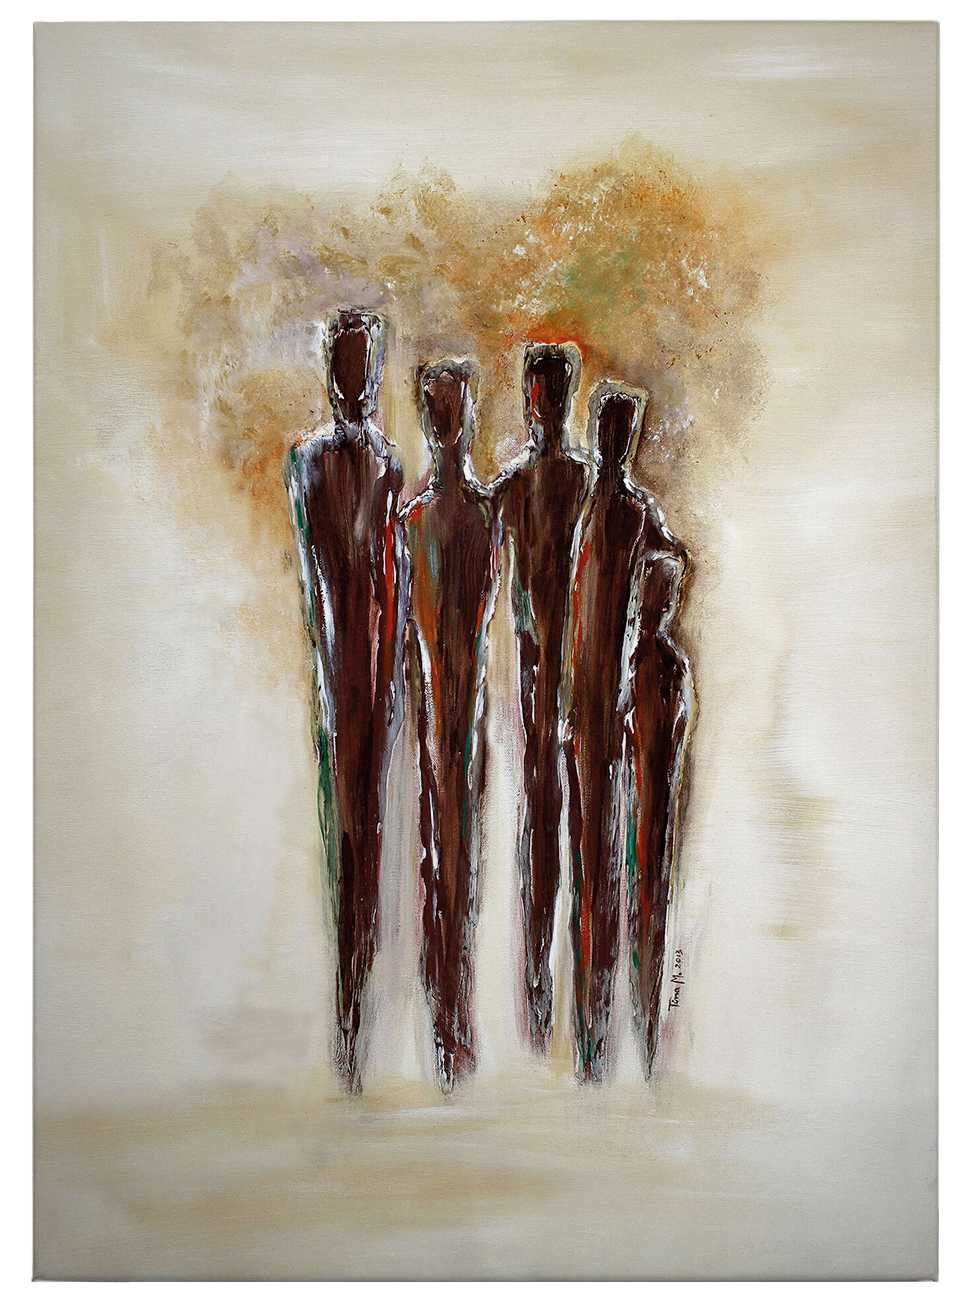             Canvas print Tina Melz "Together 02", portrait format
        